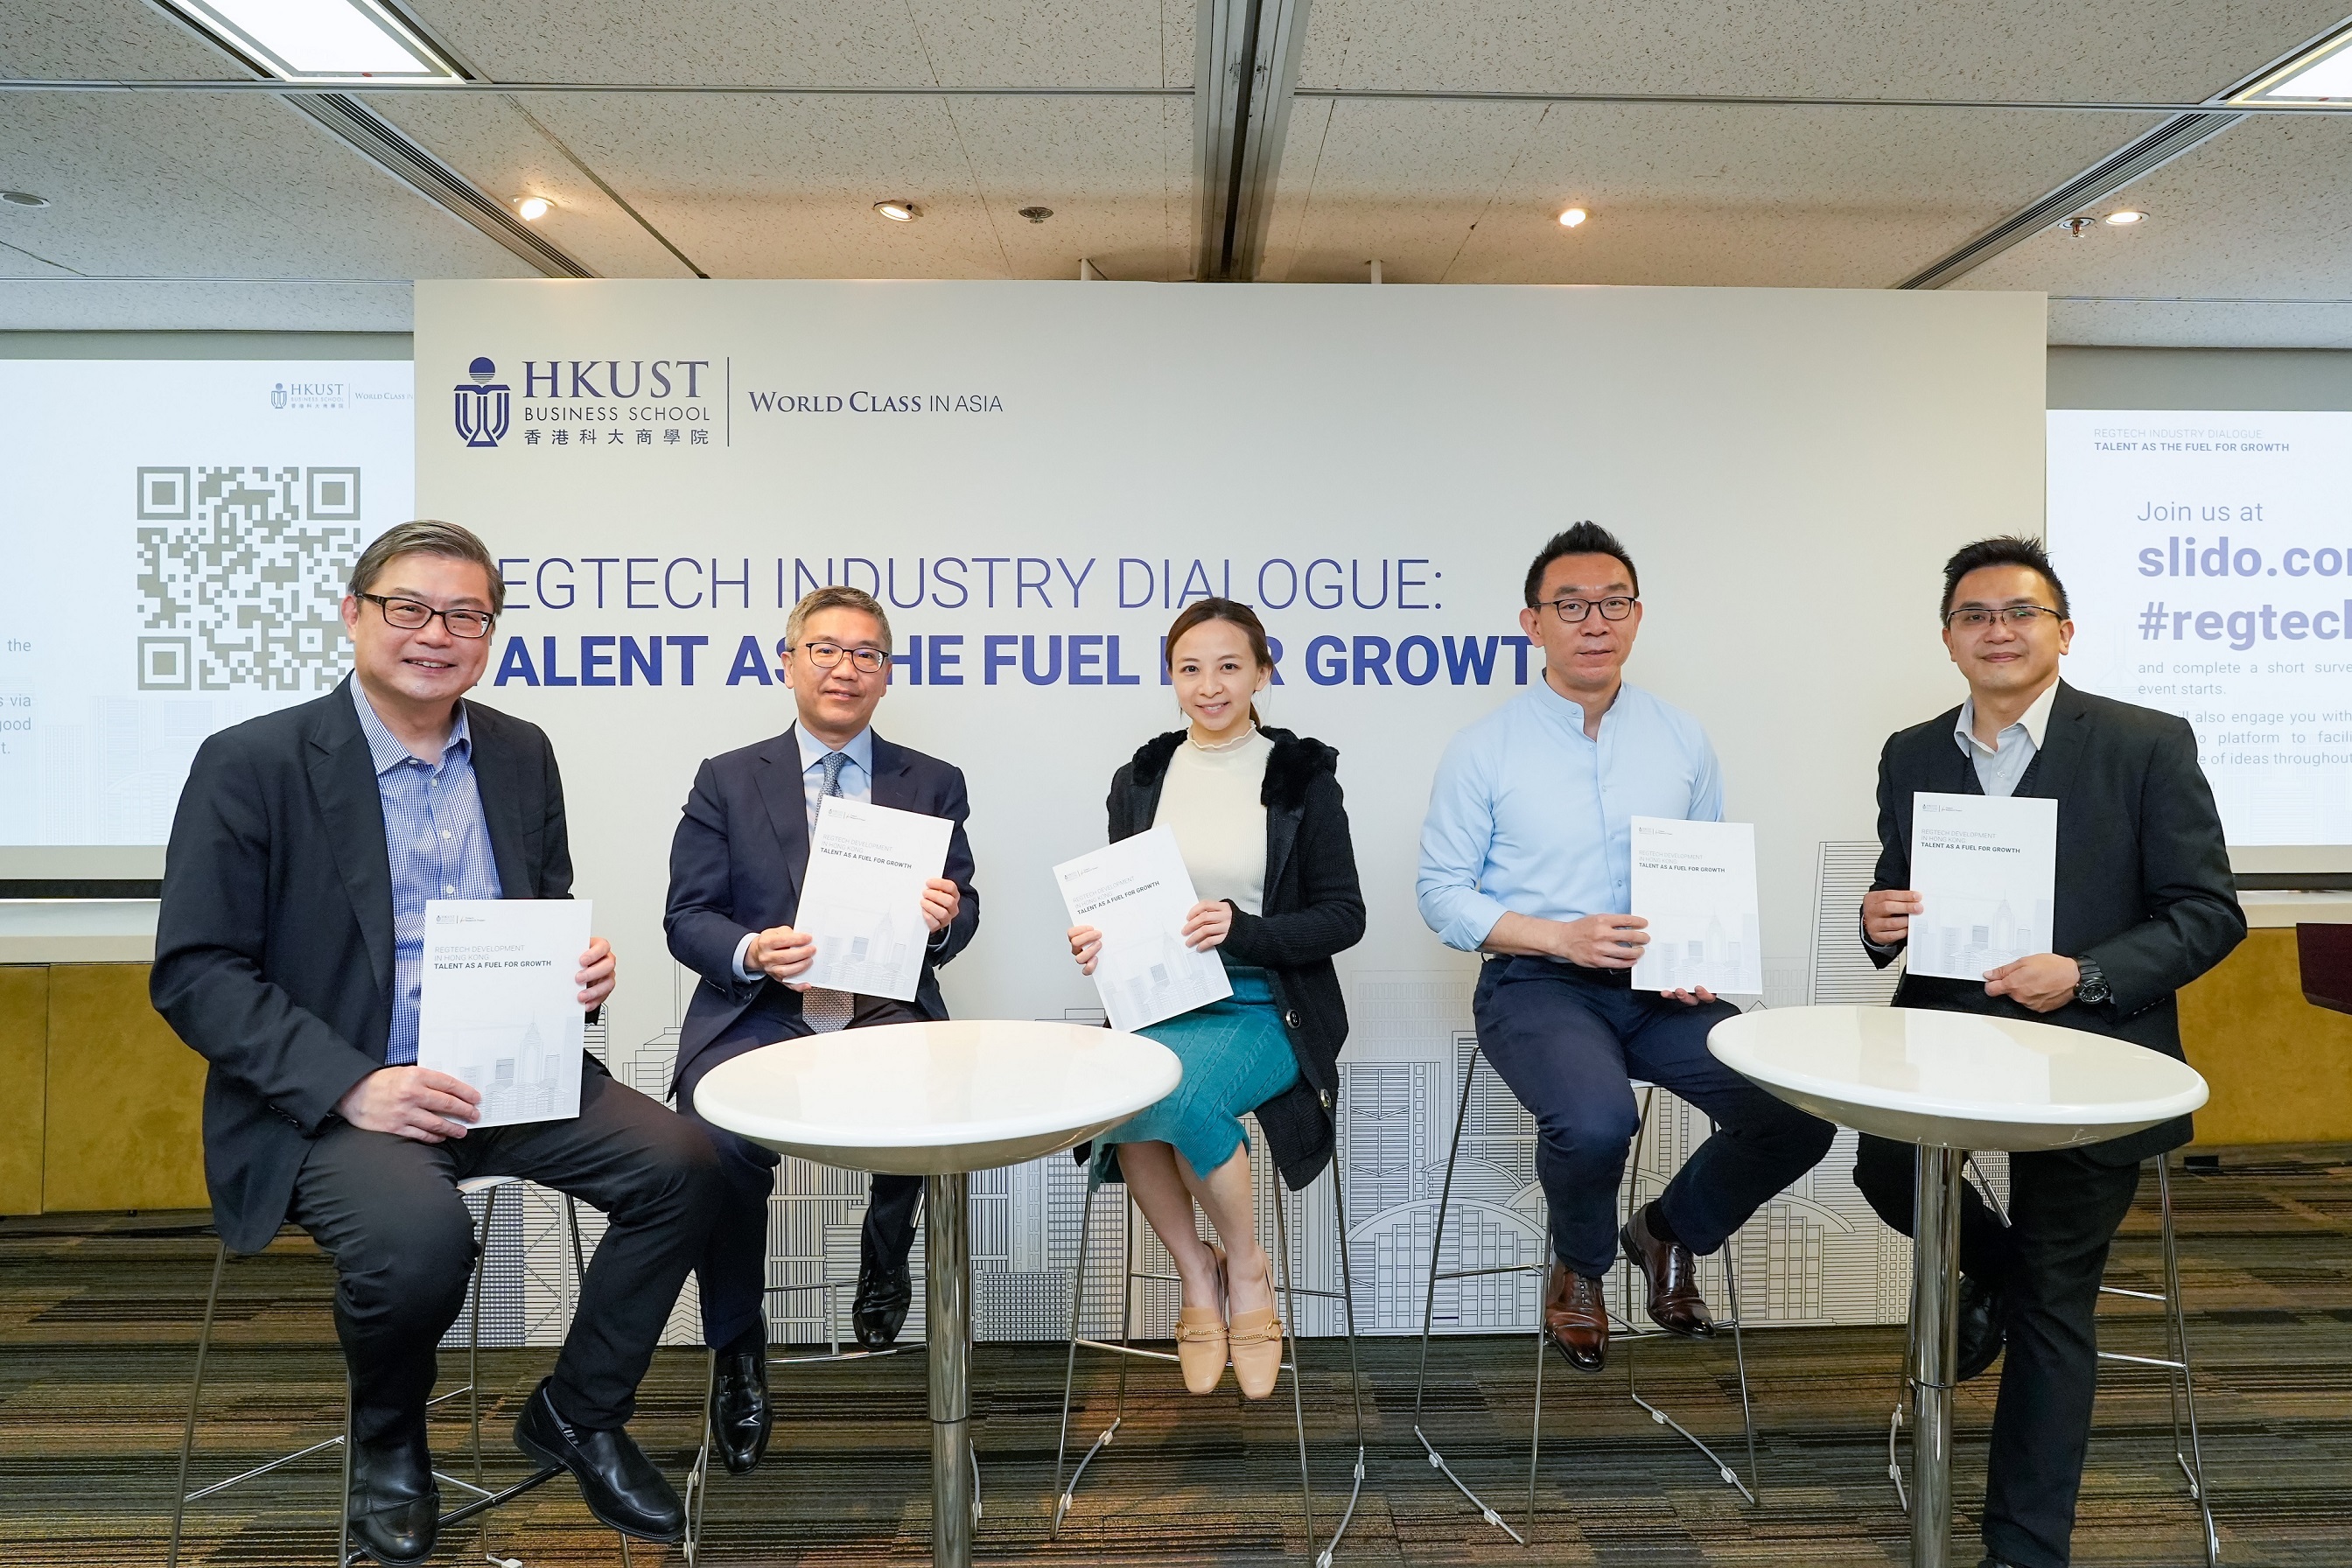 HKUST’s In-depth Study Shows Pathways to Strengthening Hong Kong’s Regtech Capabilities